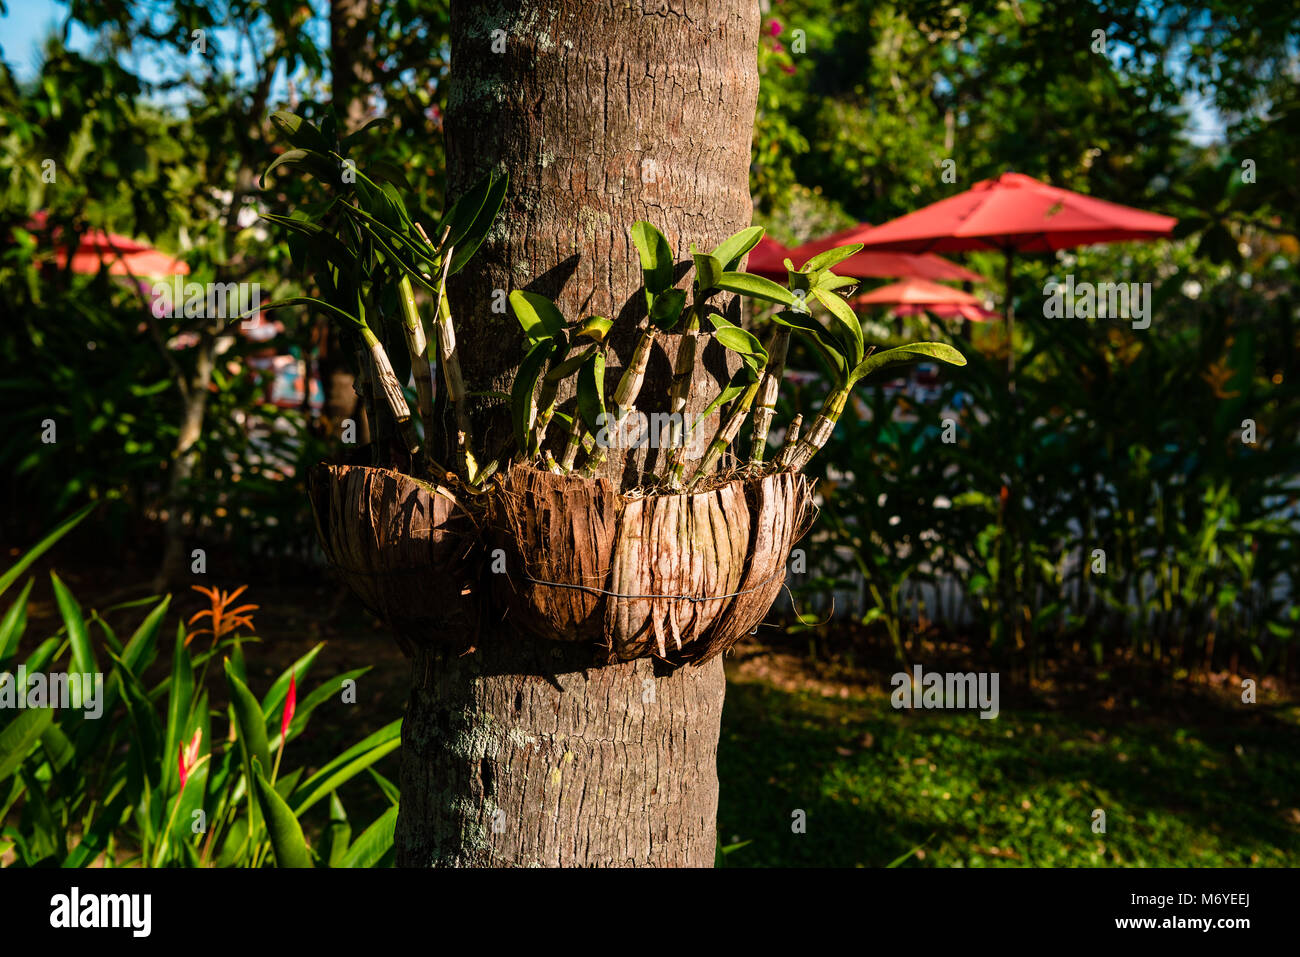 Creative arrangement of flowerpots on tree Stock Photo